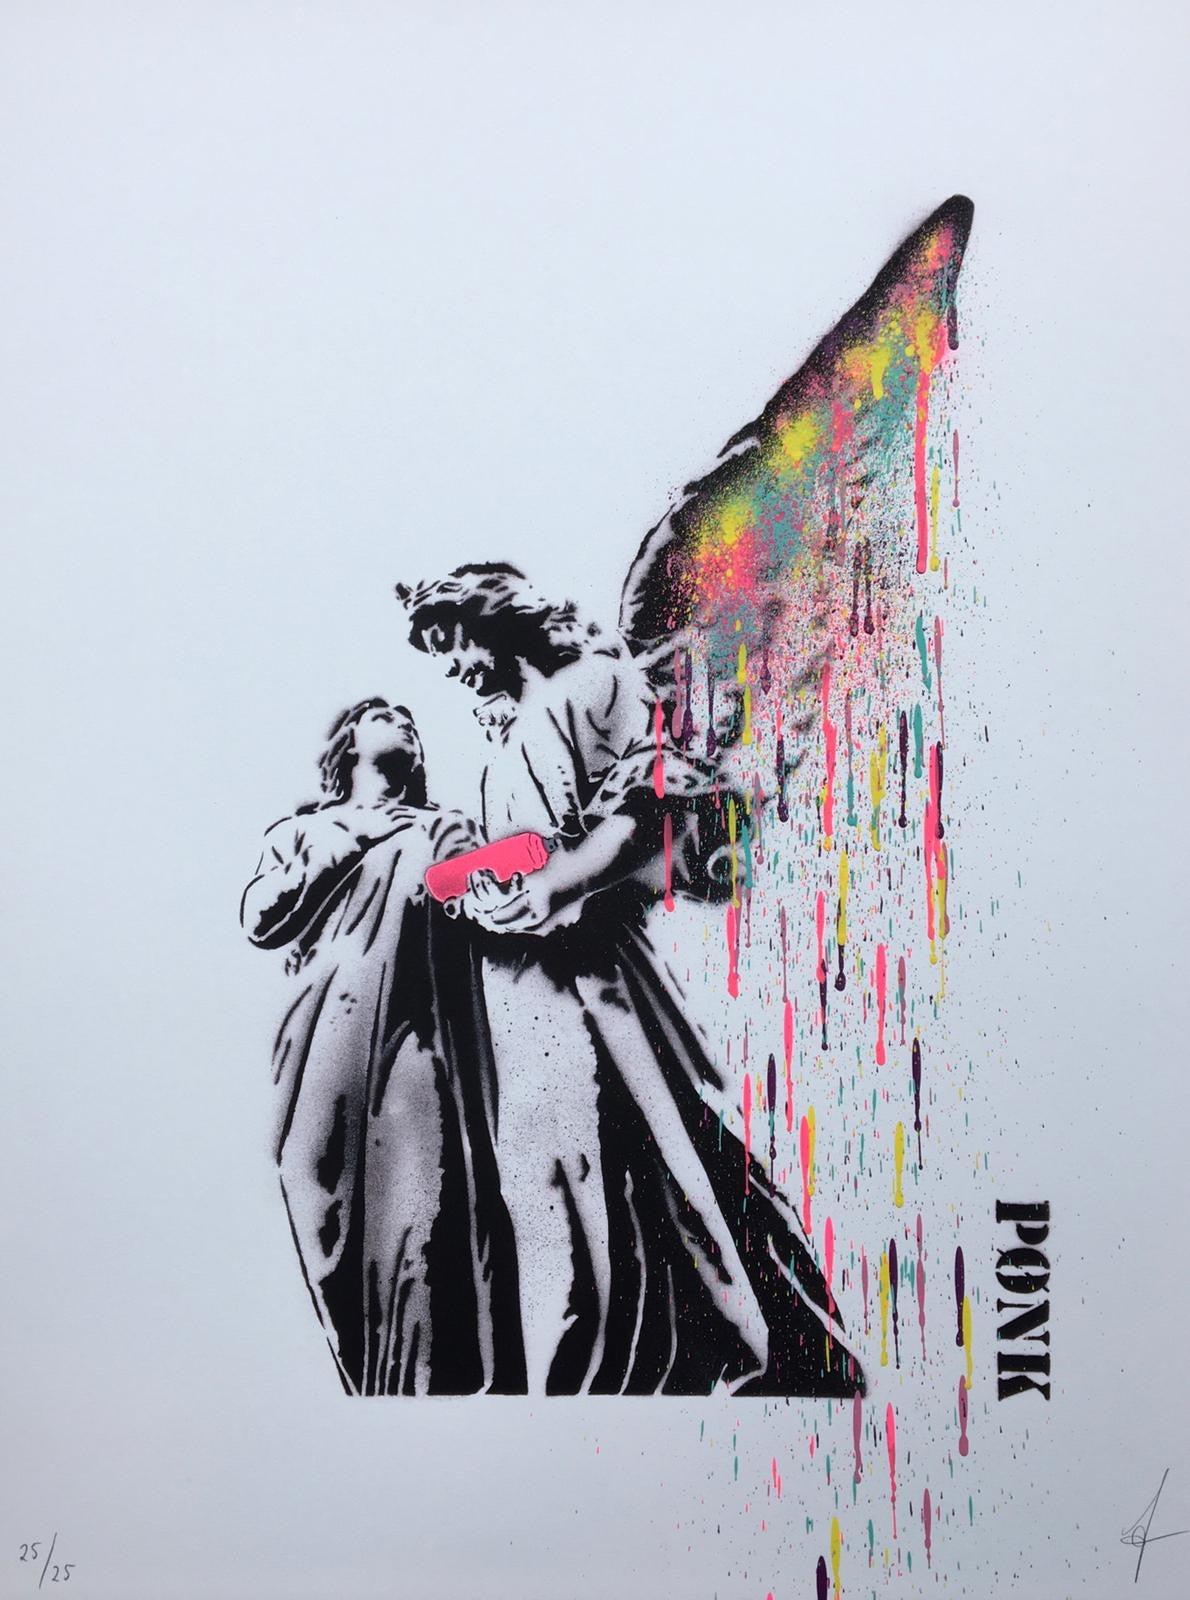 Spray for Love by PONK (Street Art), 2021